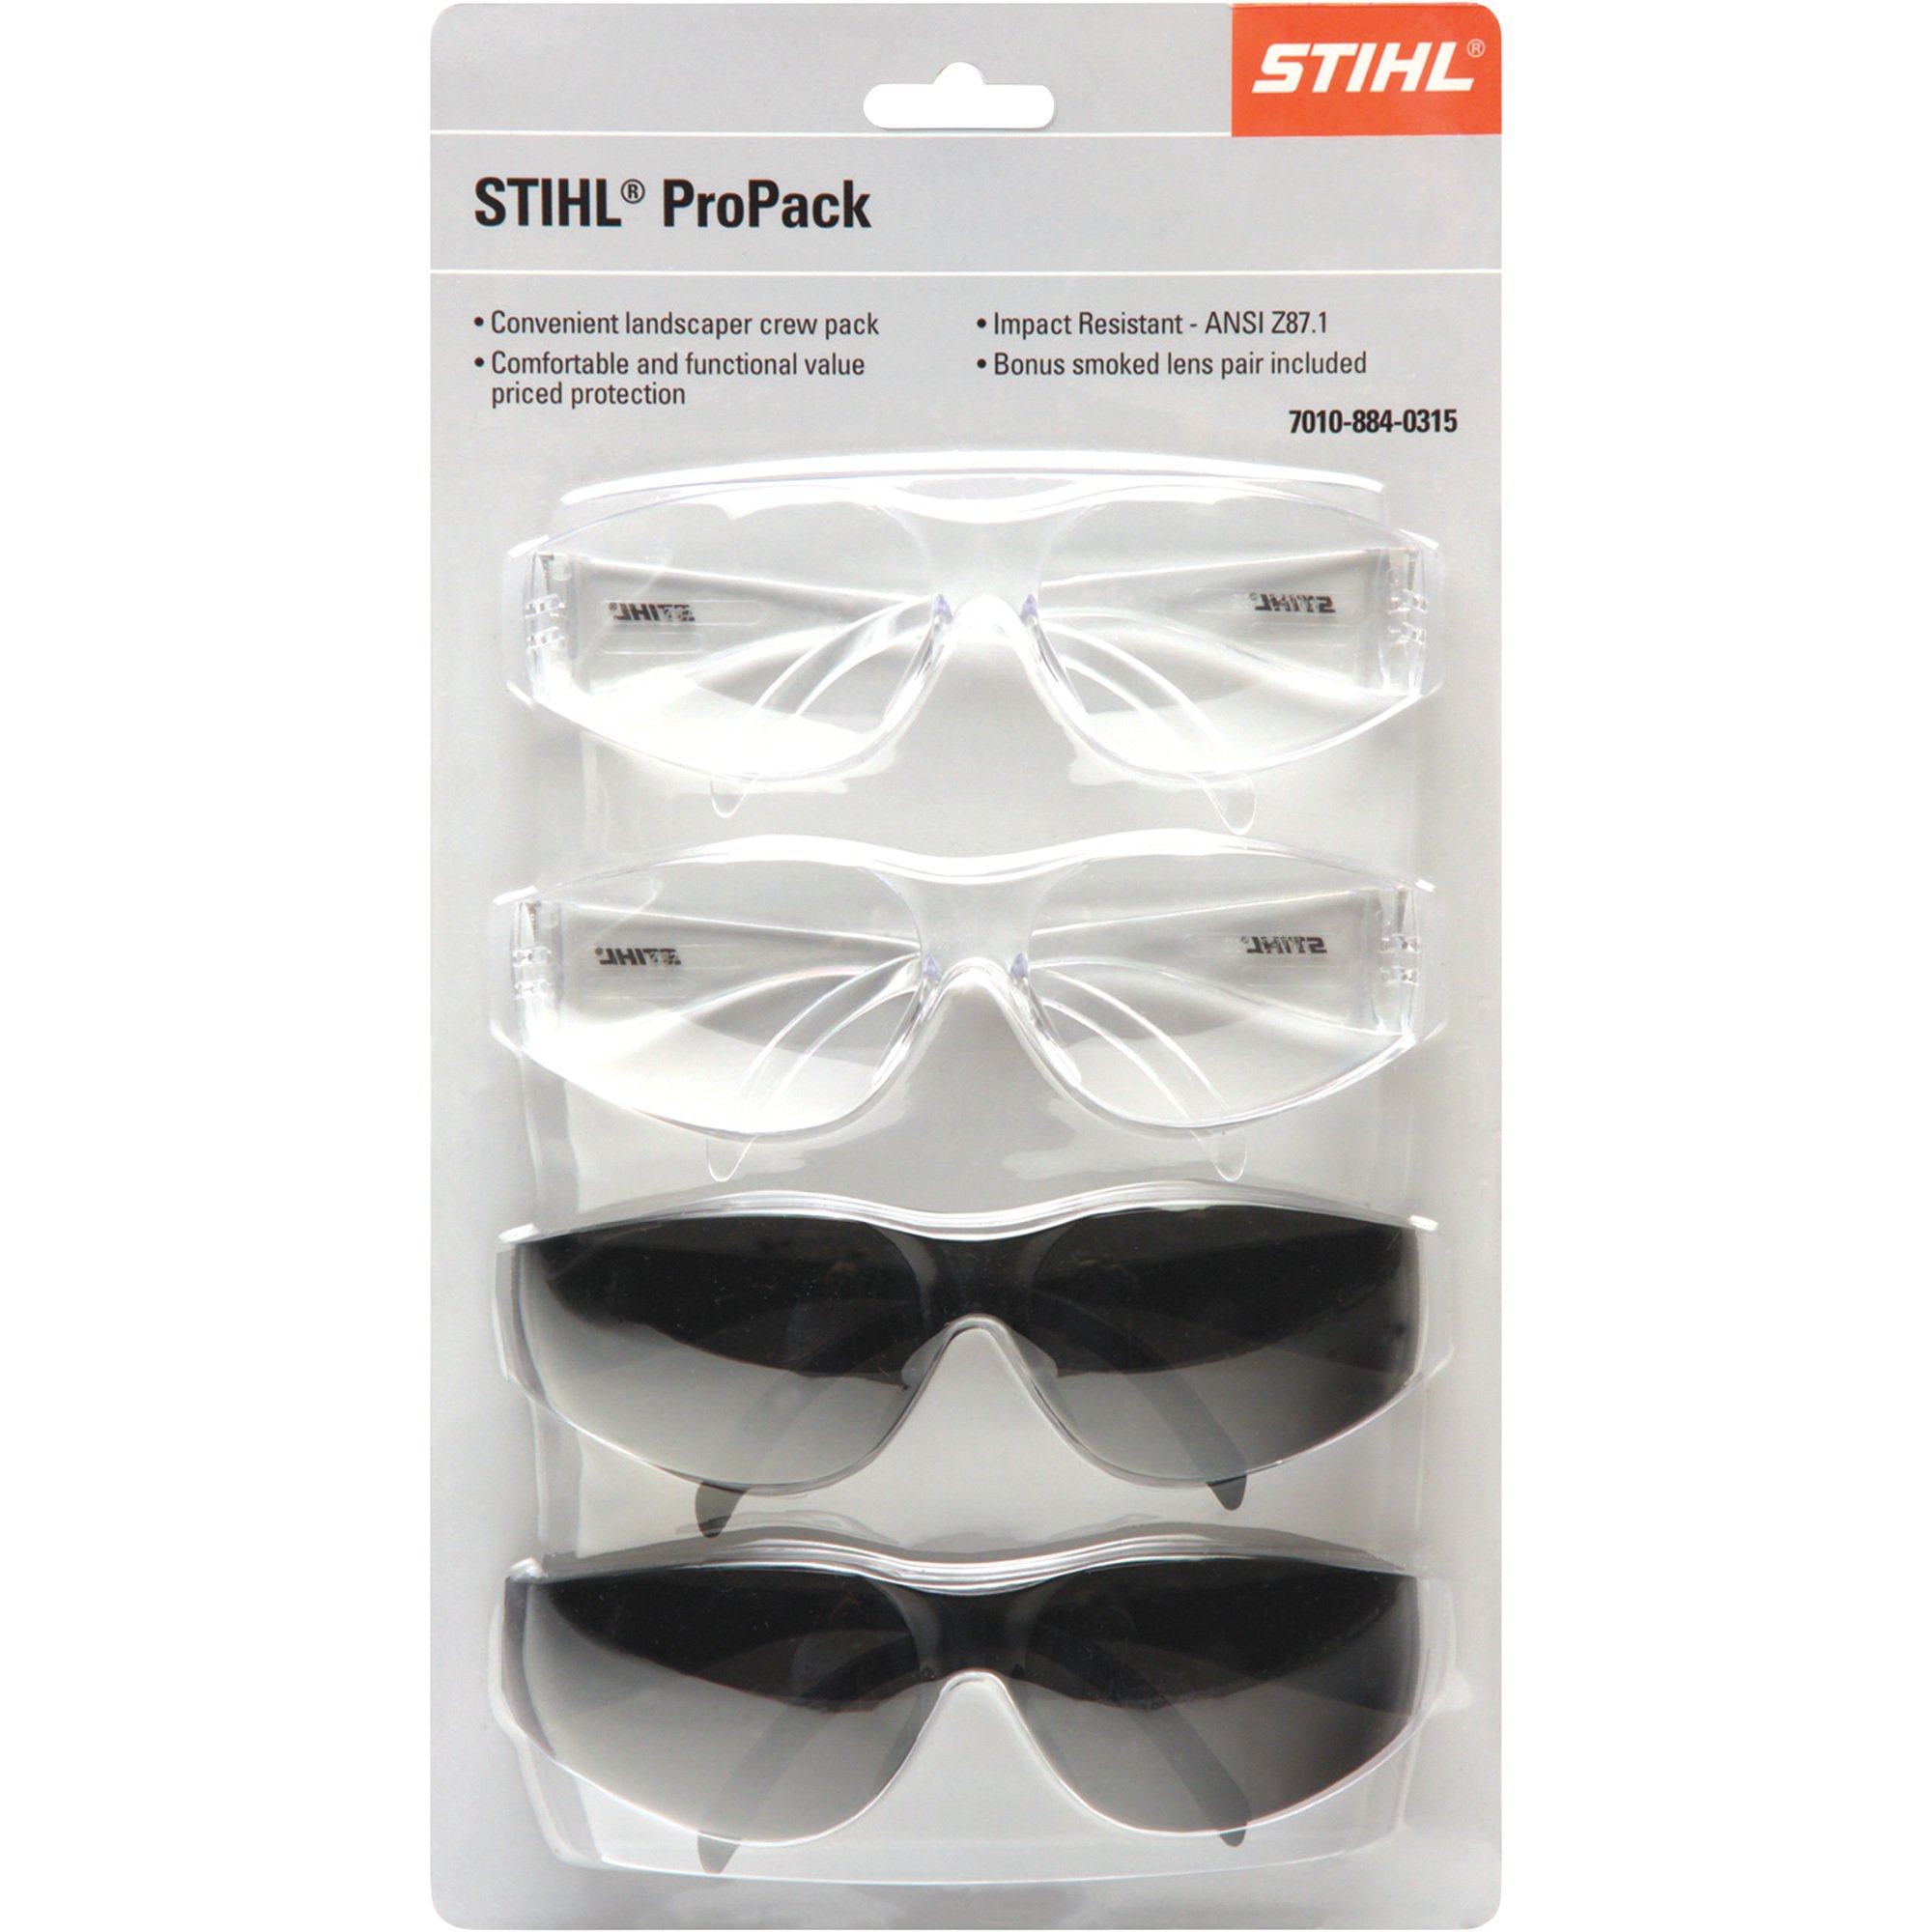 Stinger® Smoke Polarized Lens, Dark Gray Frame Safety Glasses - BH61712